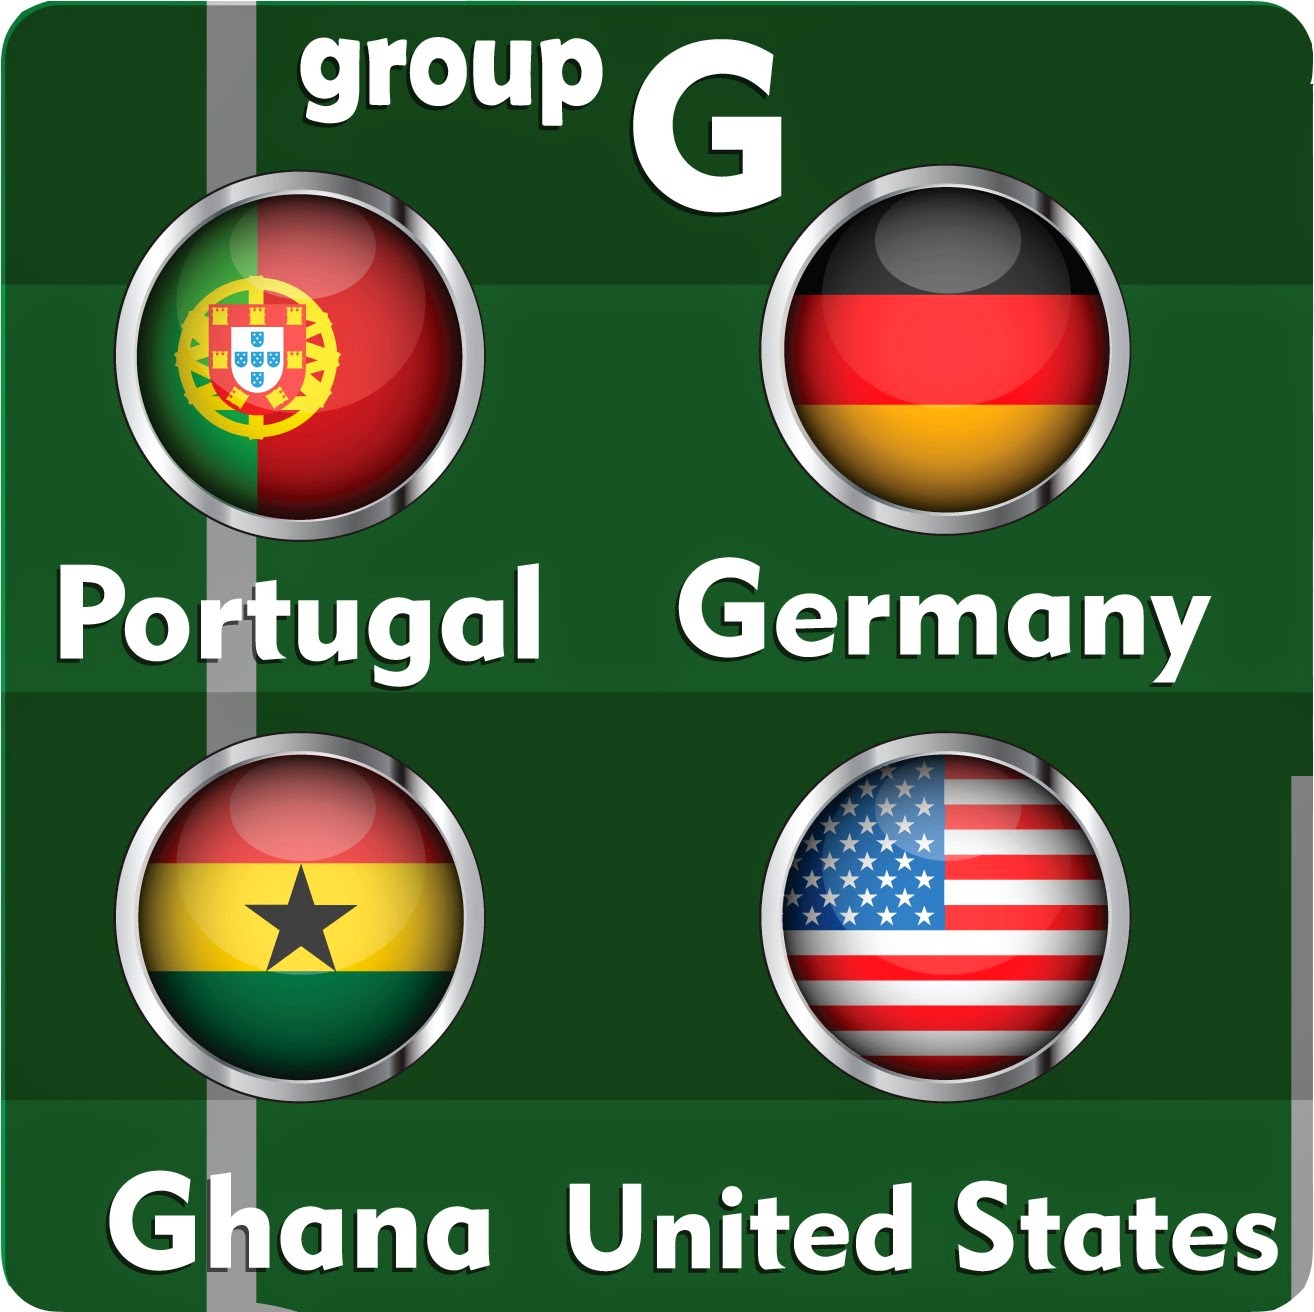 2014fifaworldcupbrazil.-Group-G-Germany-